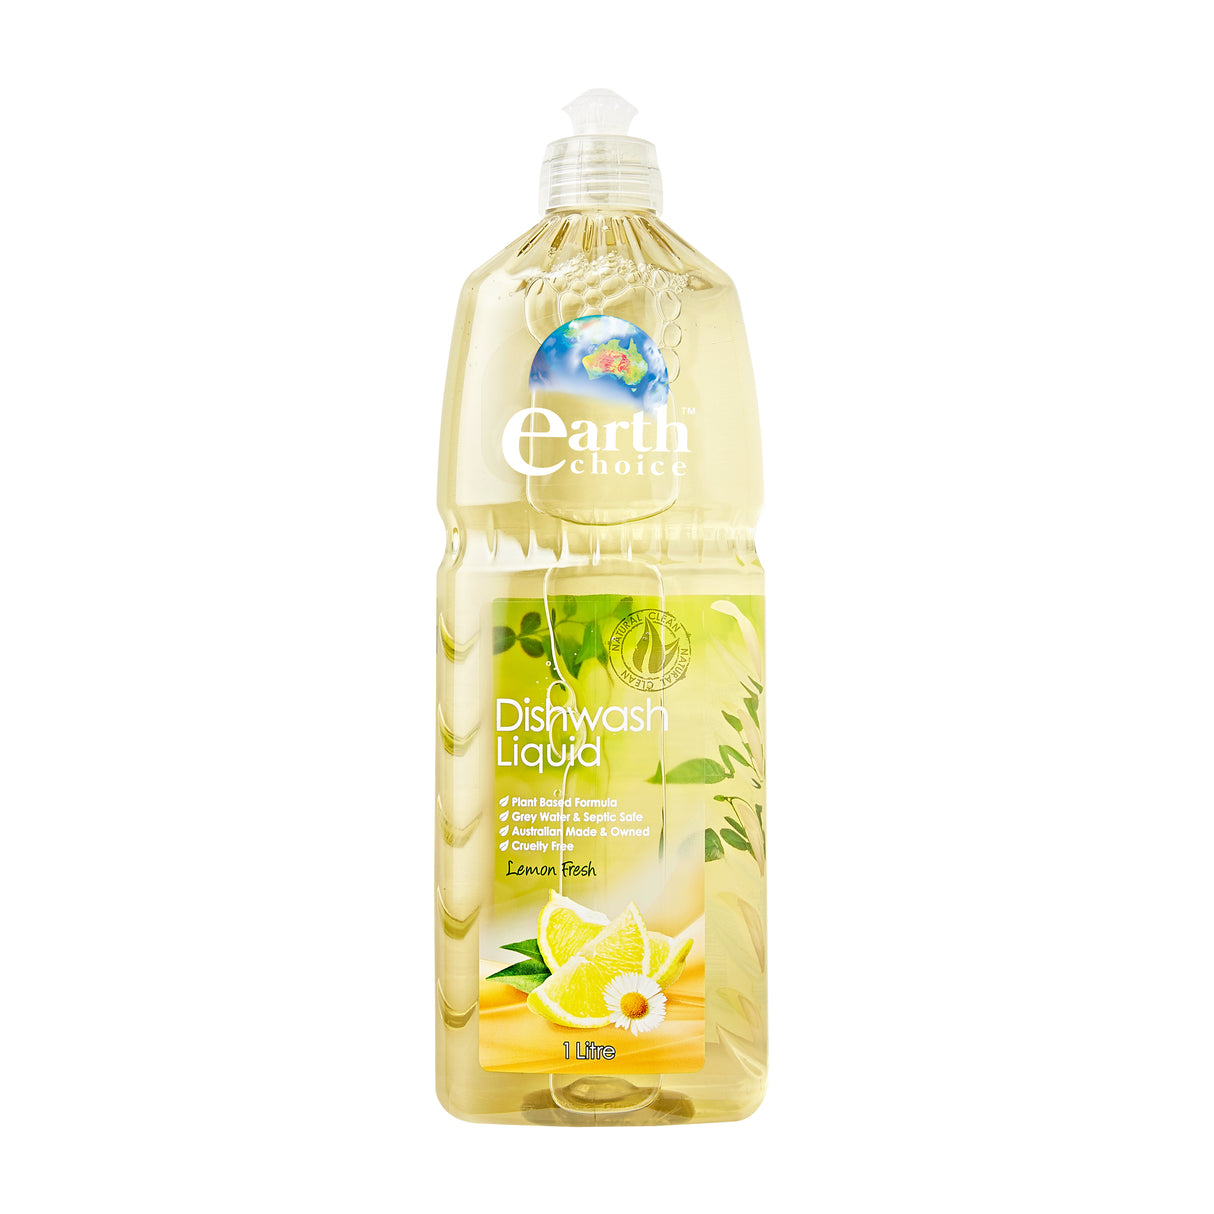 Earth Choice 1L Dishwashing Liquid - Lemon Fresh